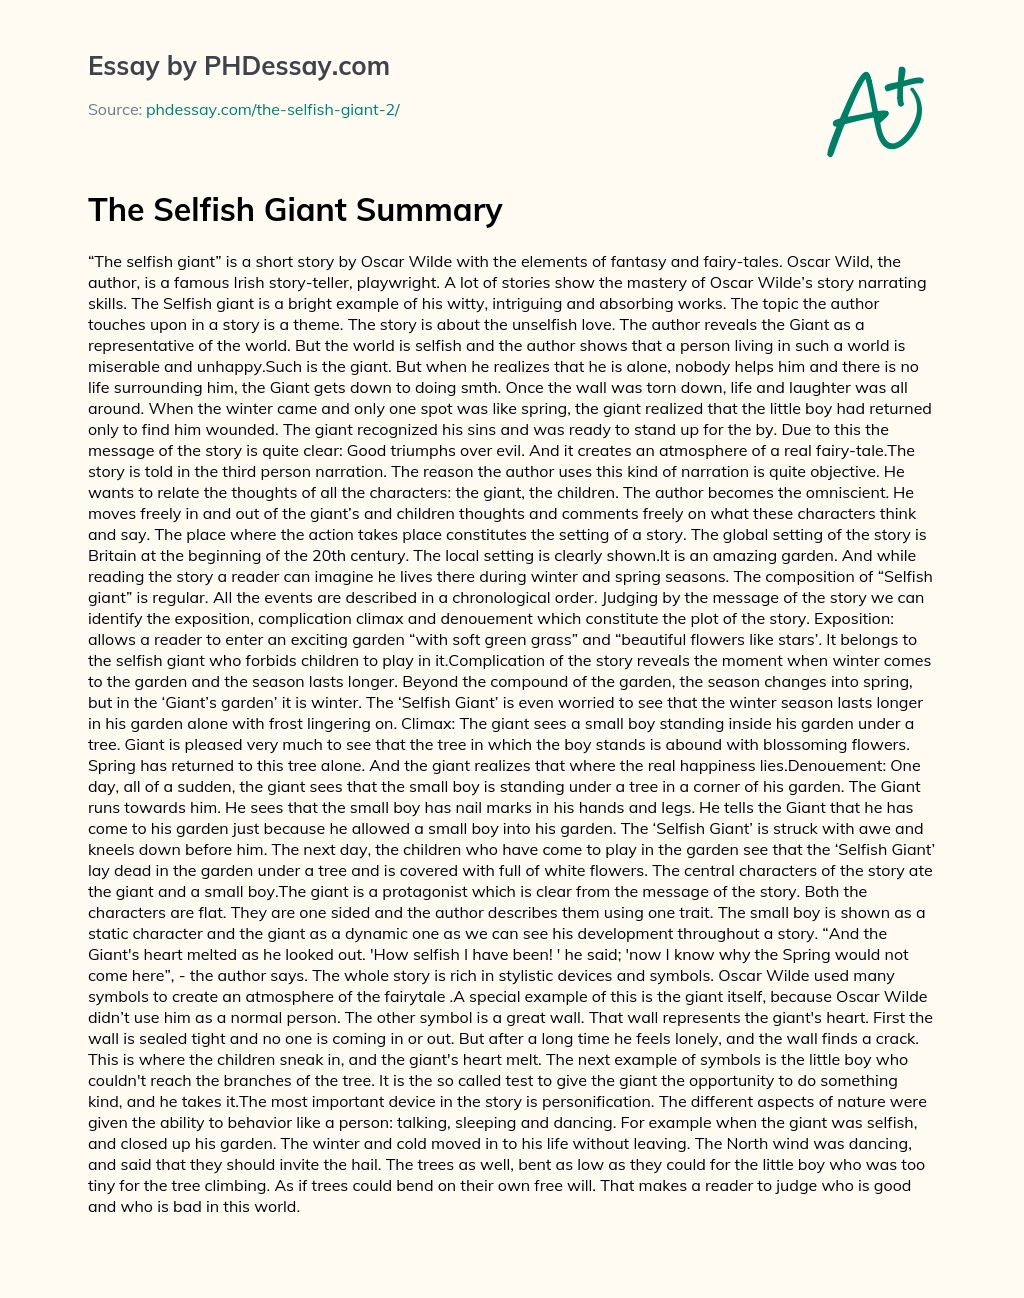 The Selfish Giant Summary essay